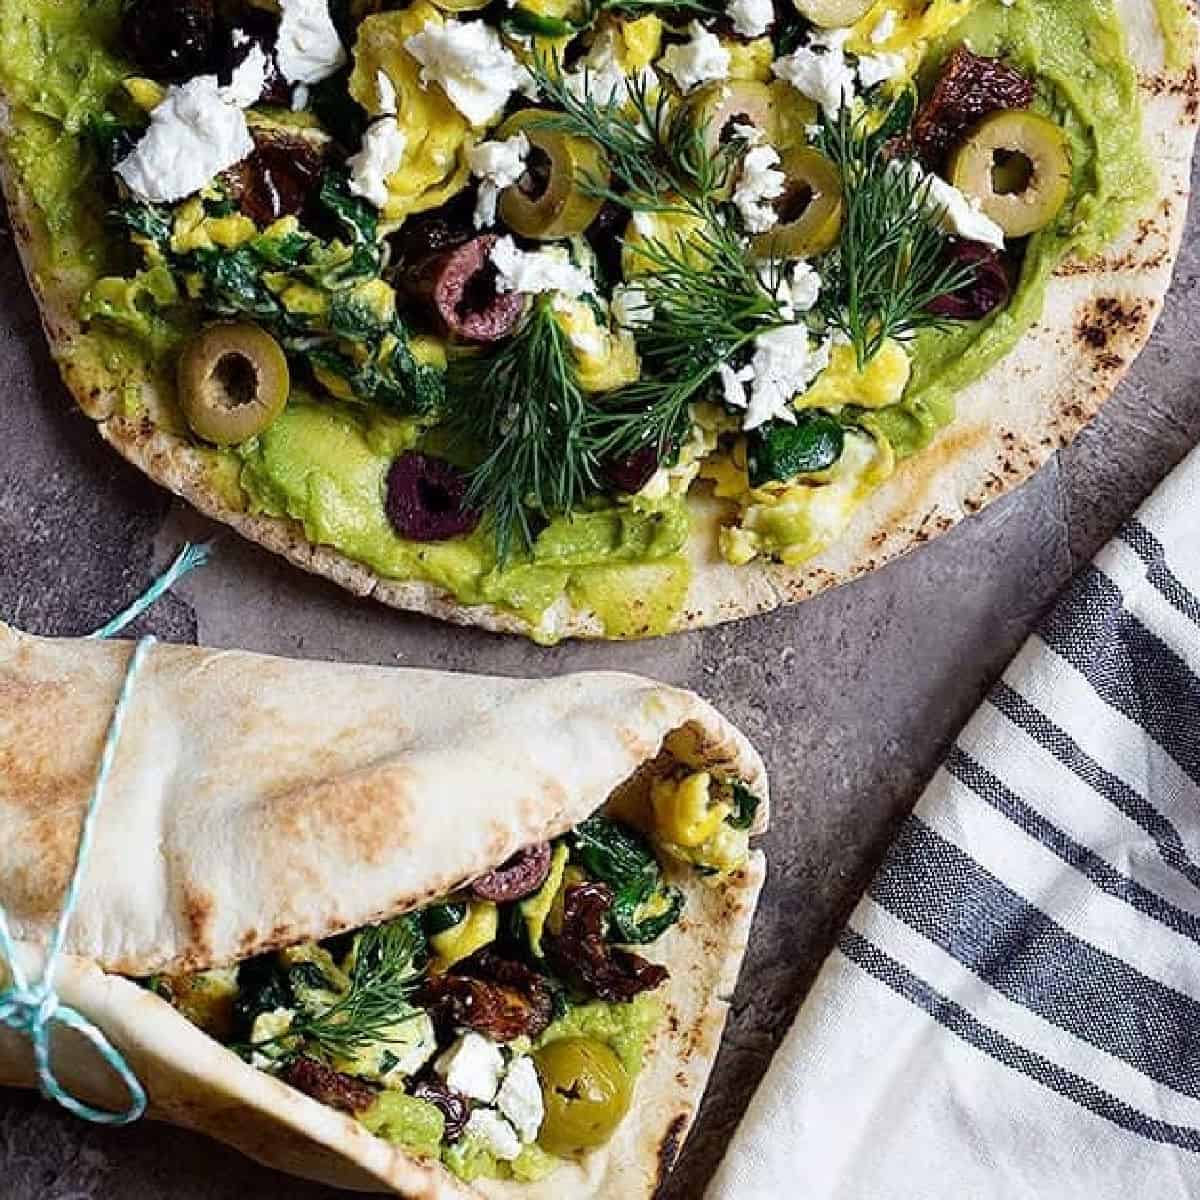 Greek avocado egg sandwich
Mediterranean diet recipes